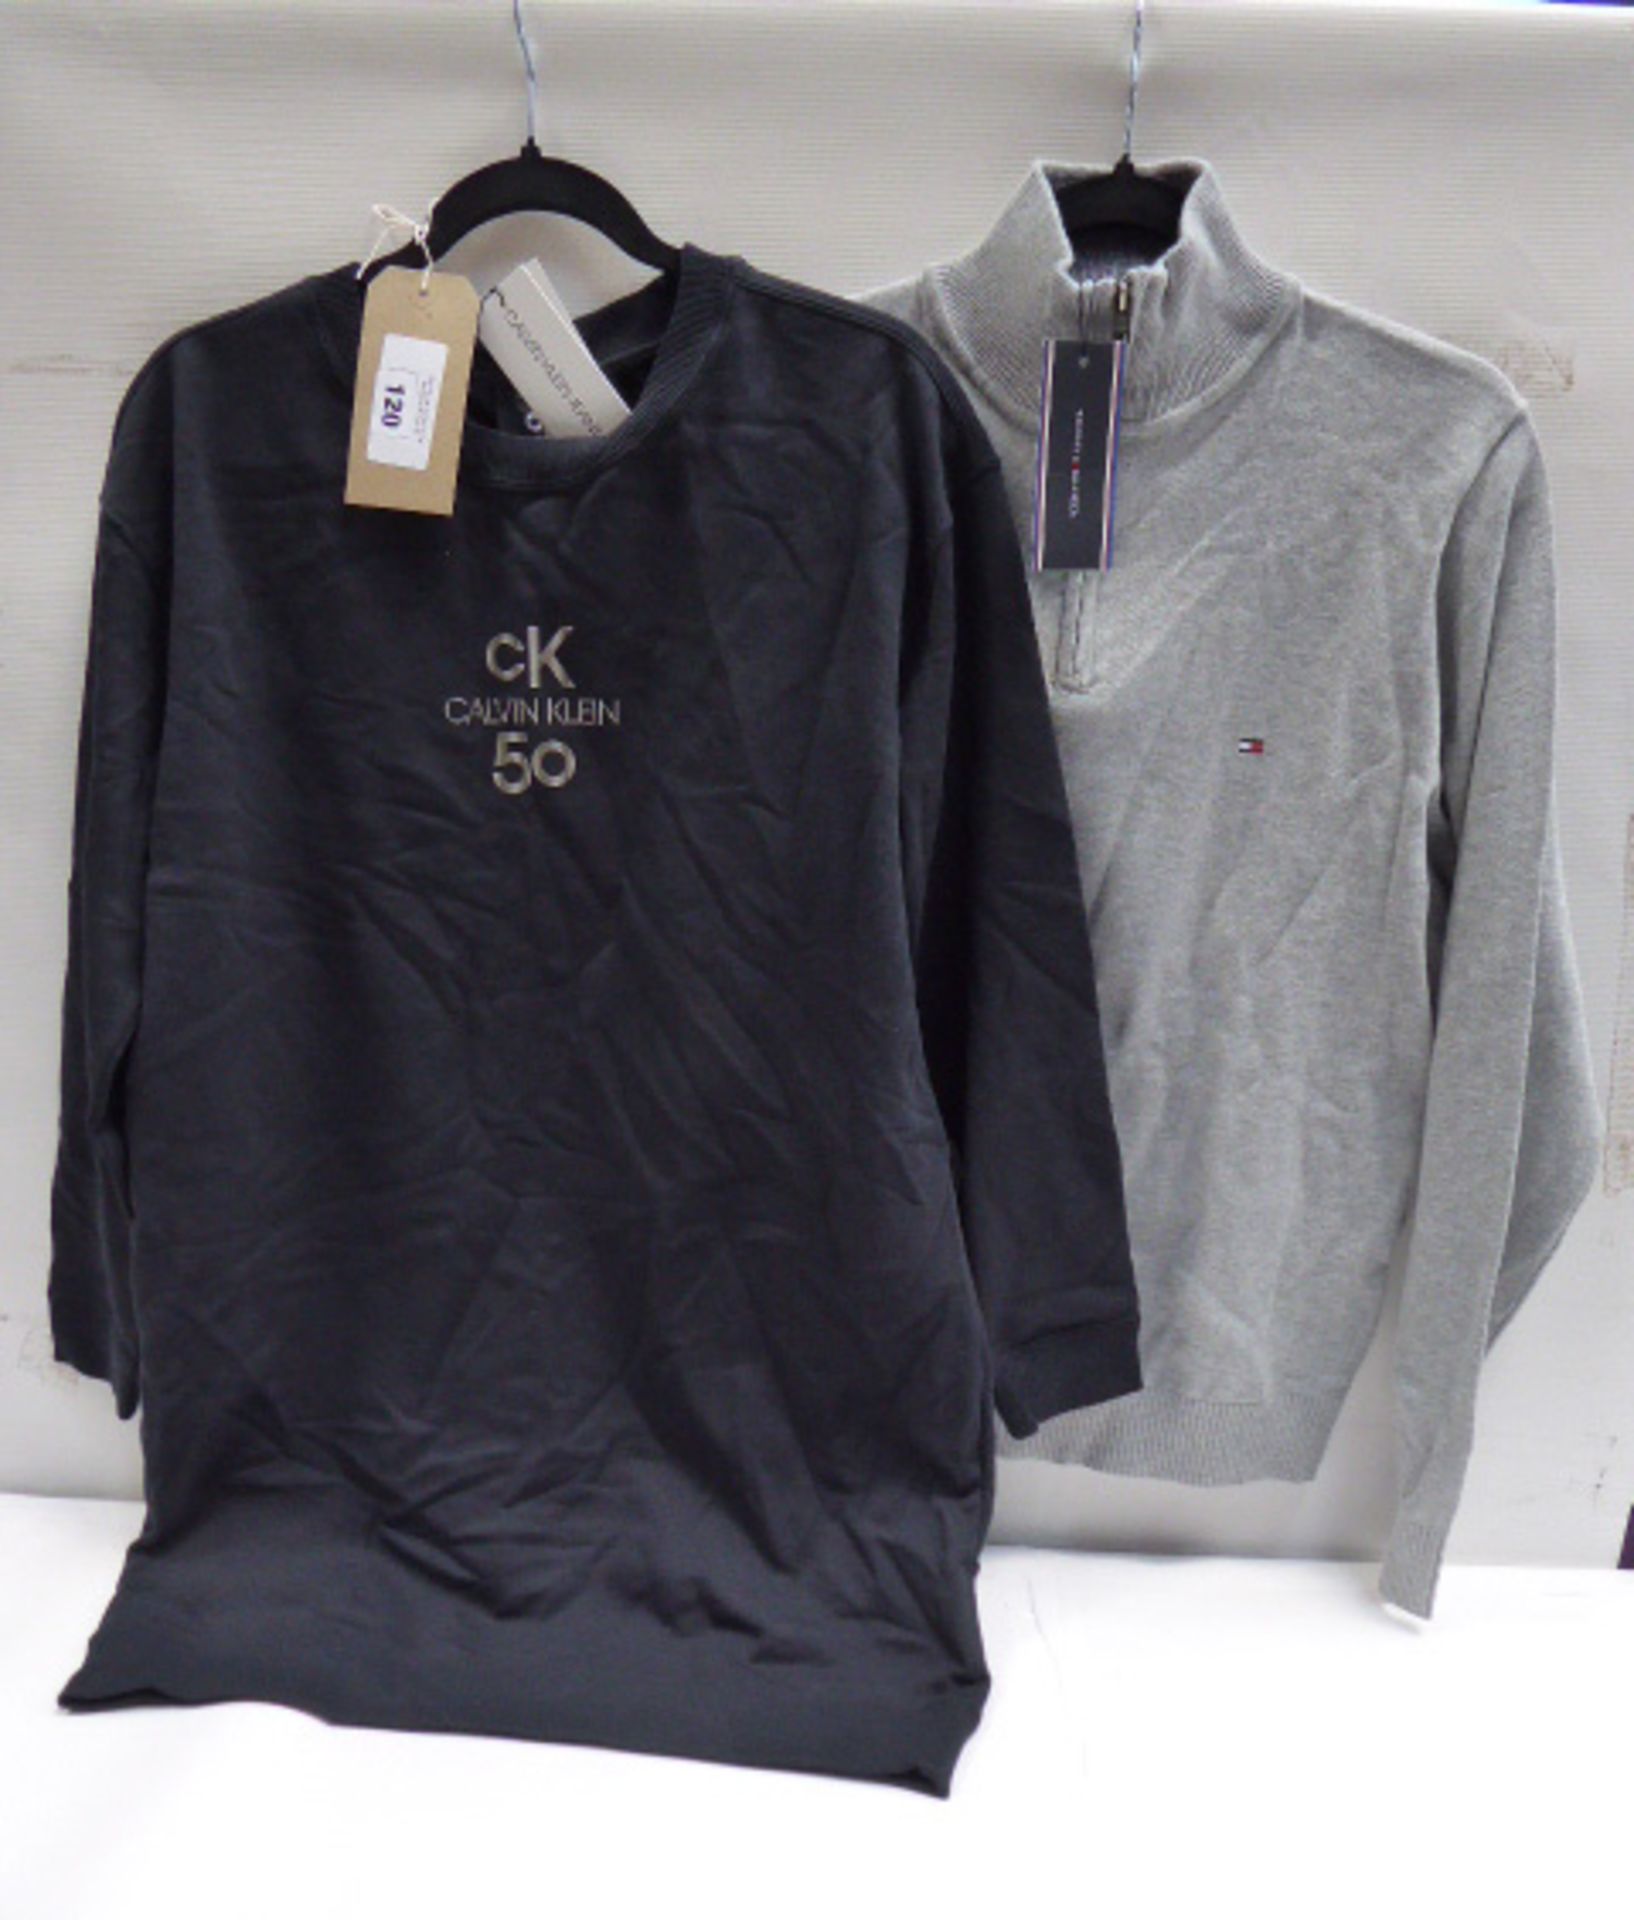 Calvin Klein Jeans 50 black beauty logo sweatshirt size small and Tommy Hilfiger grey quarter-zip